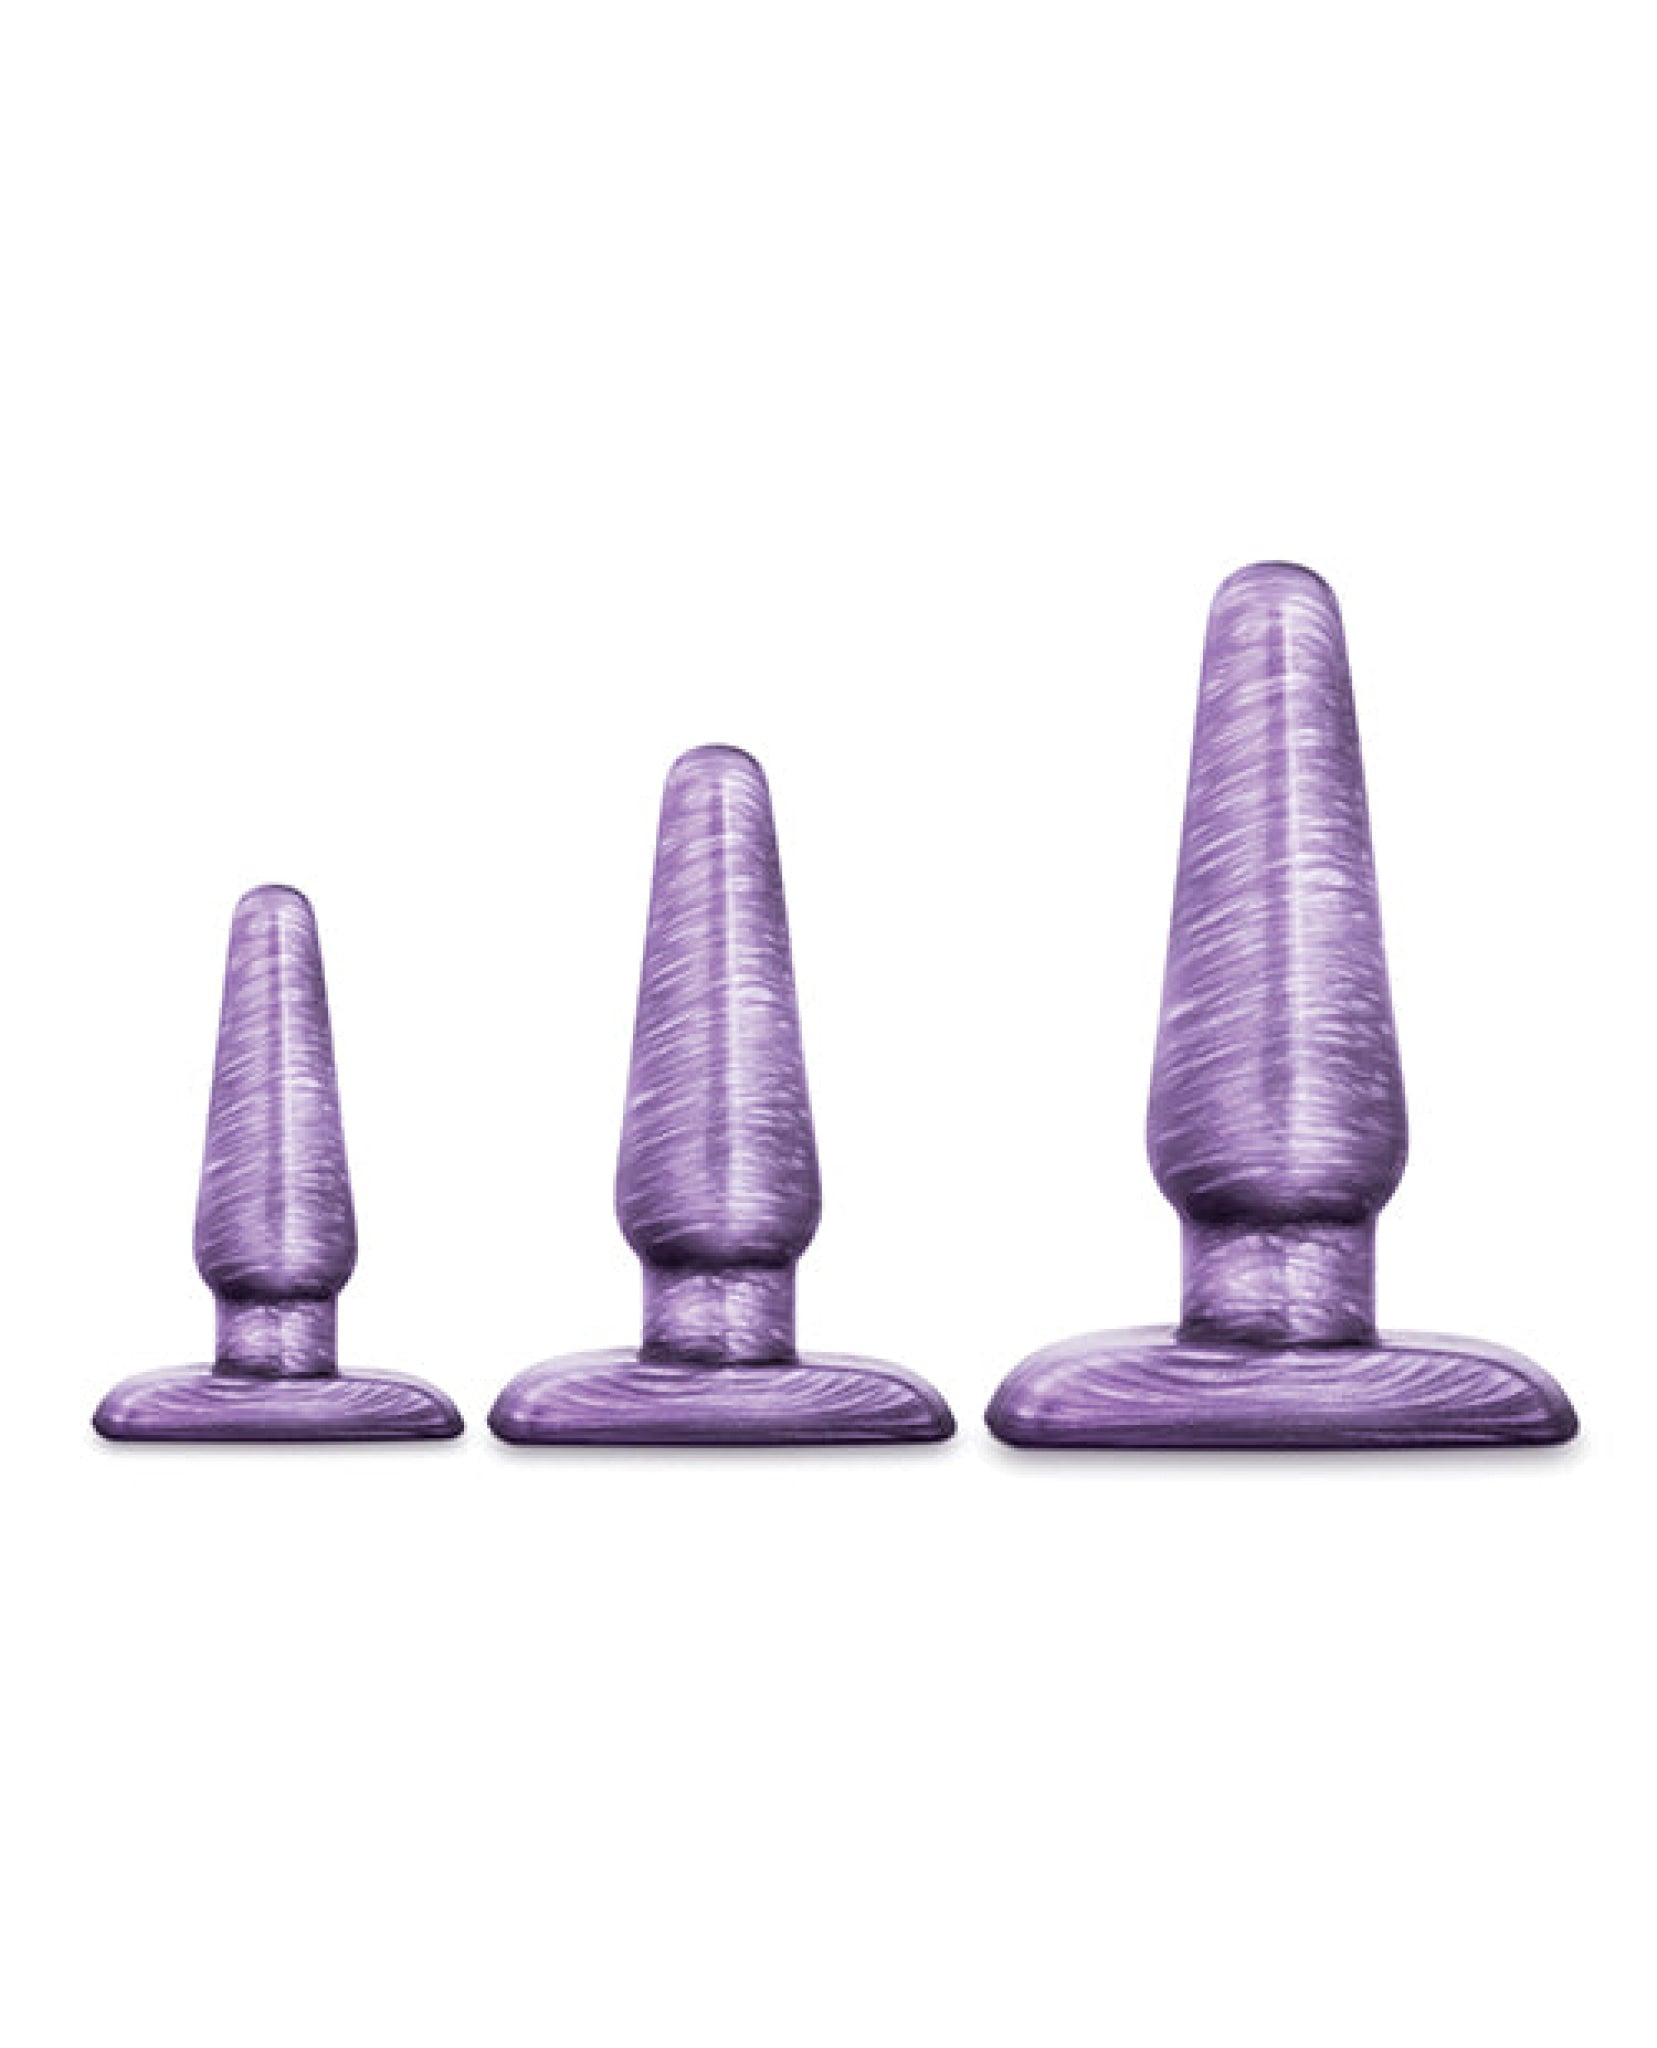 Blush B Yours Anal Trainer Kit - Purple Swirl Blush